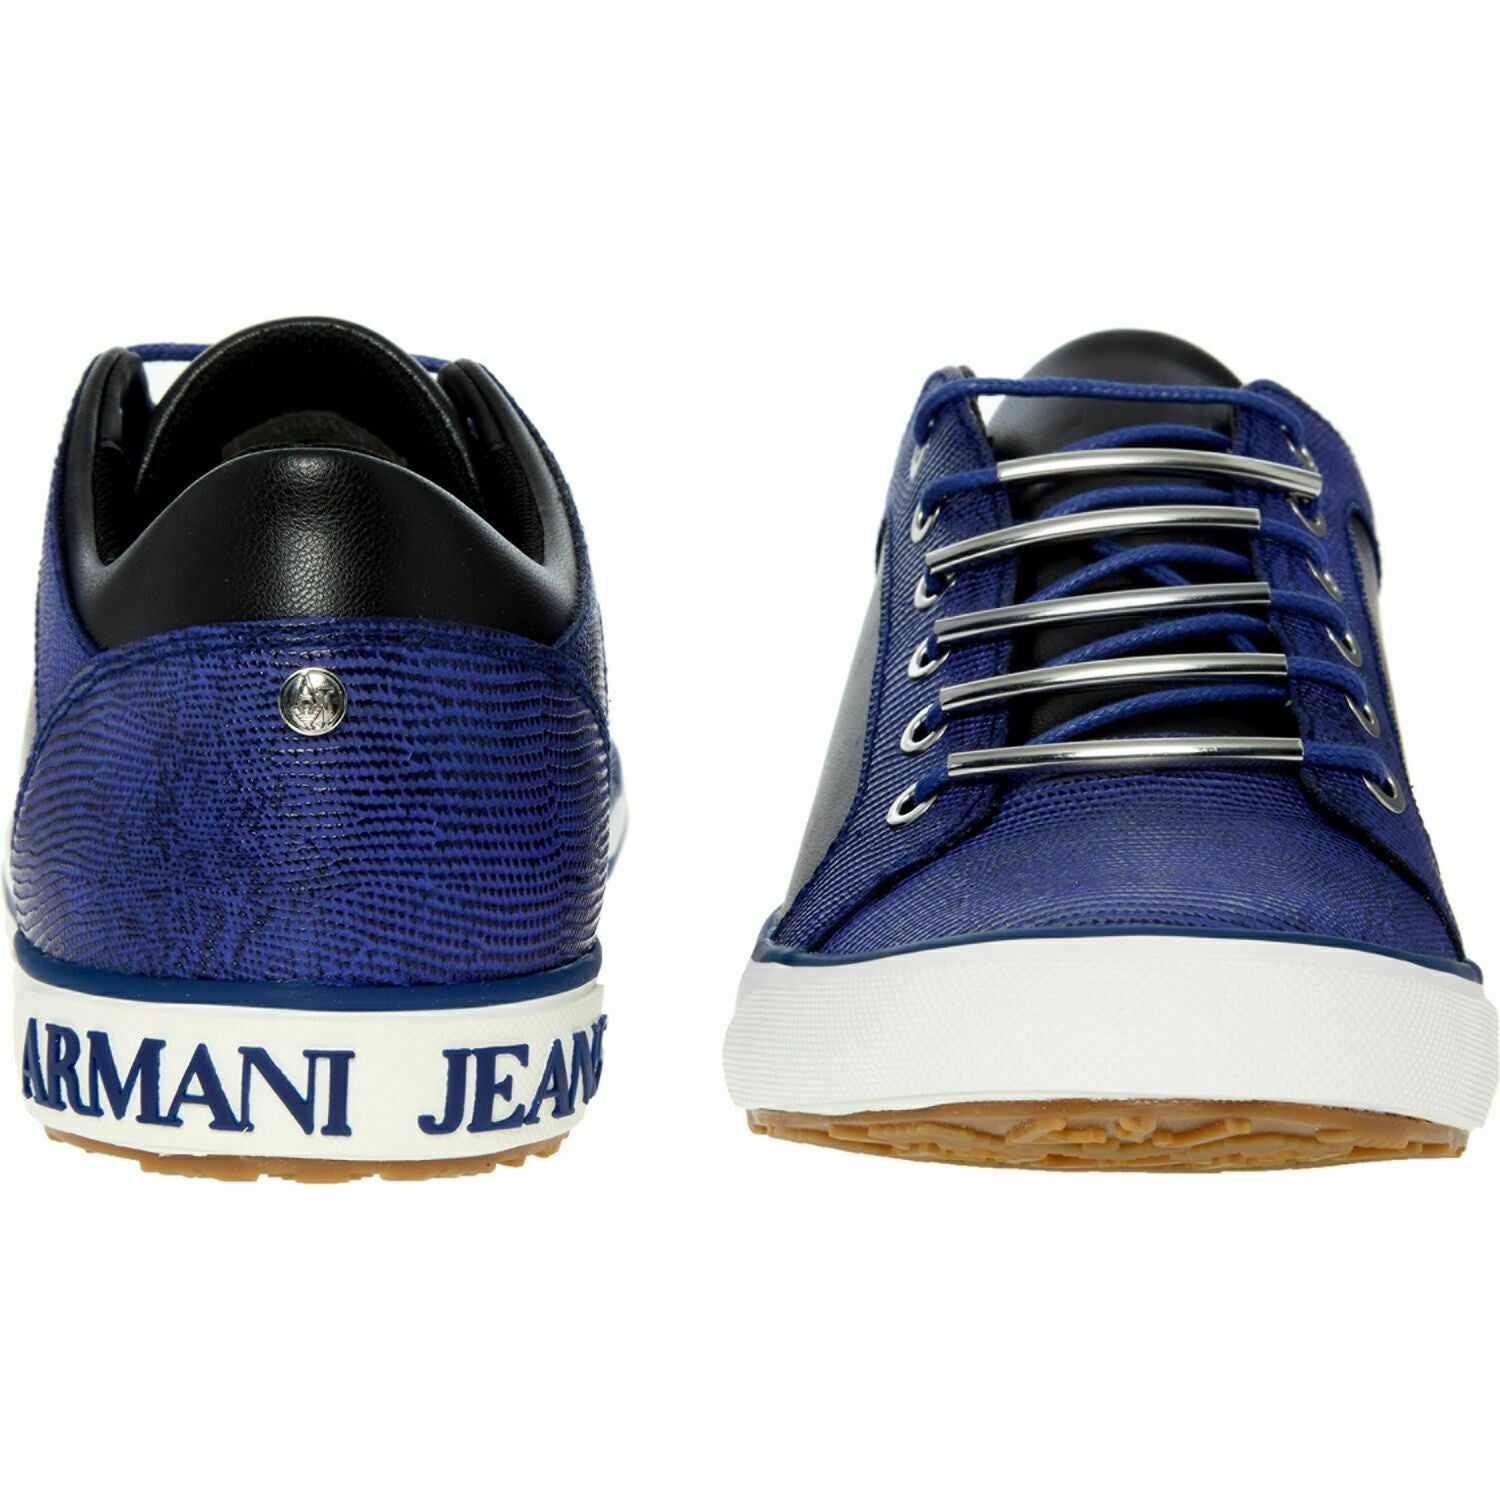 ARMANI JEANS Women's Reptile Effect Trainers Sneakers, Blue/Black, UK 5 / EU 38